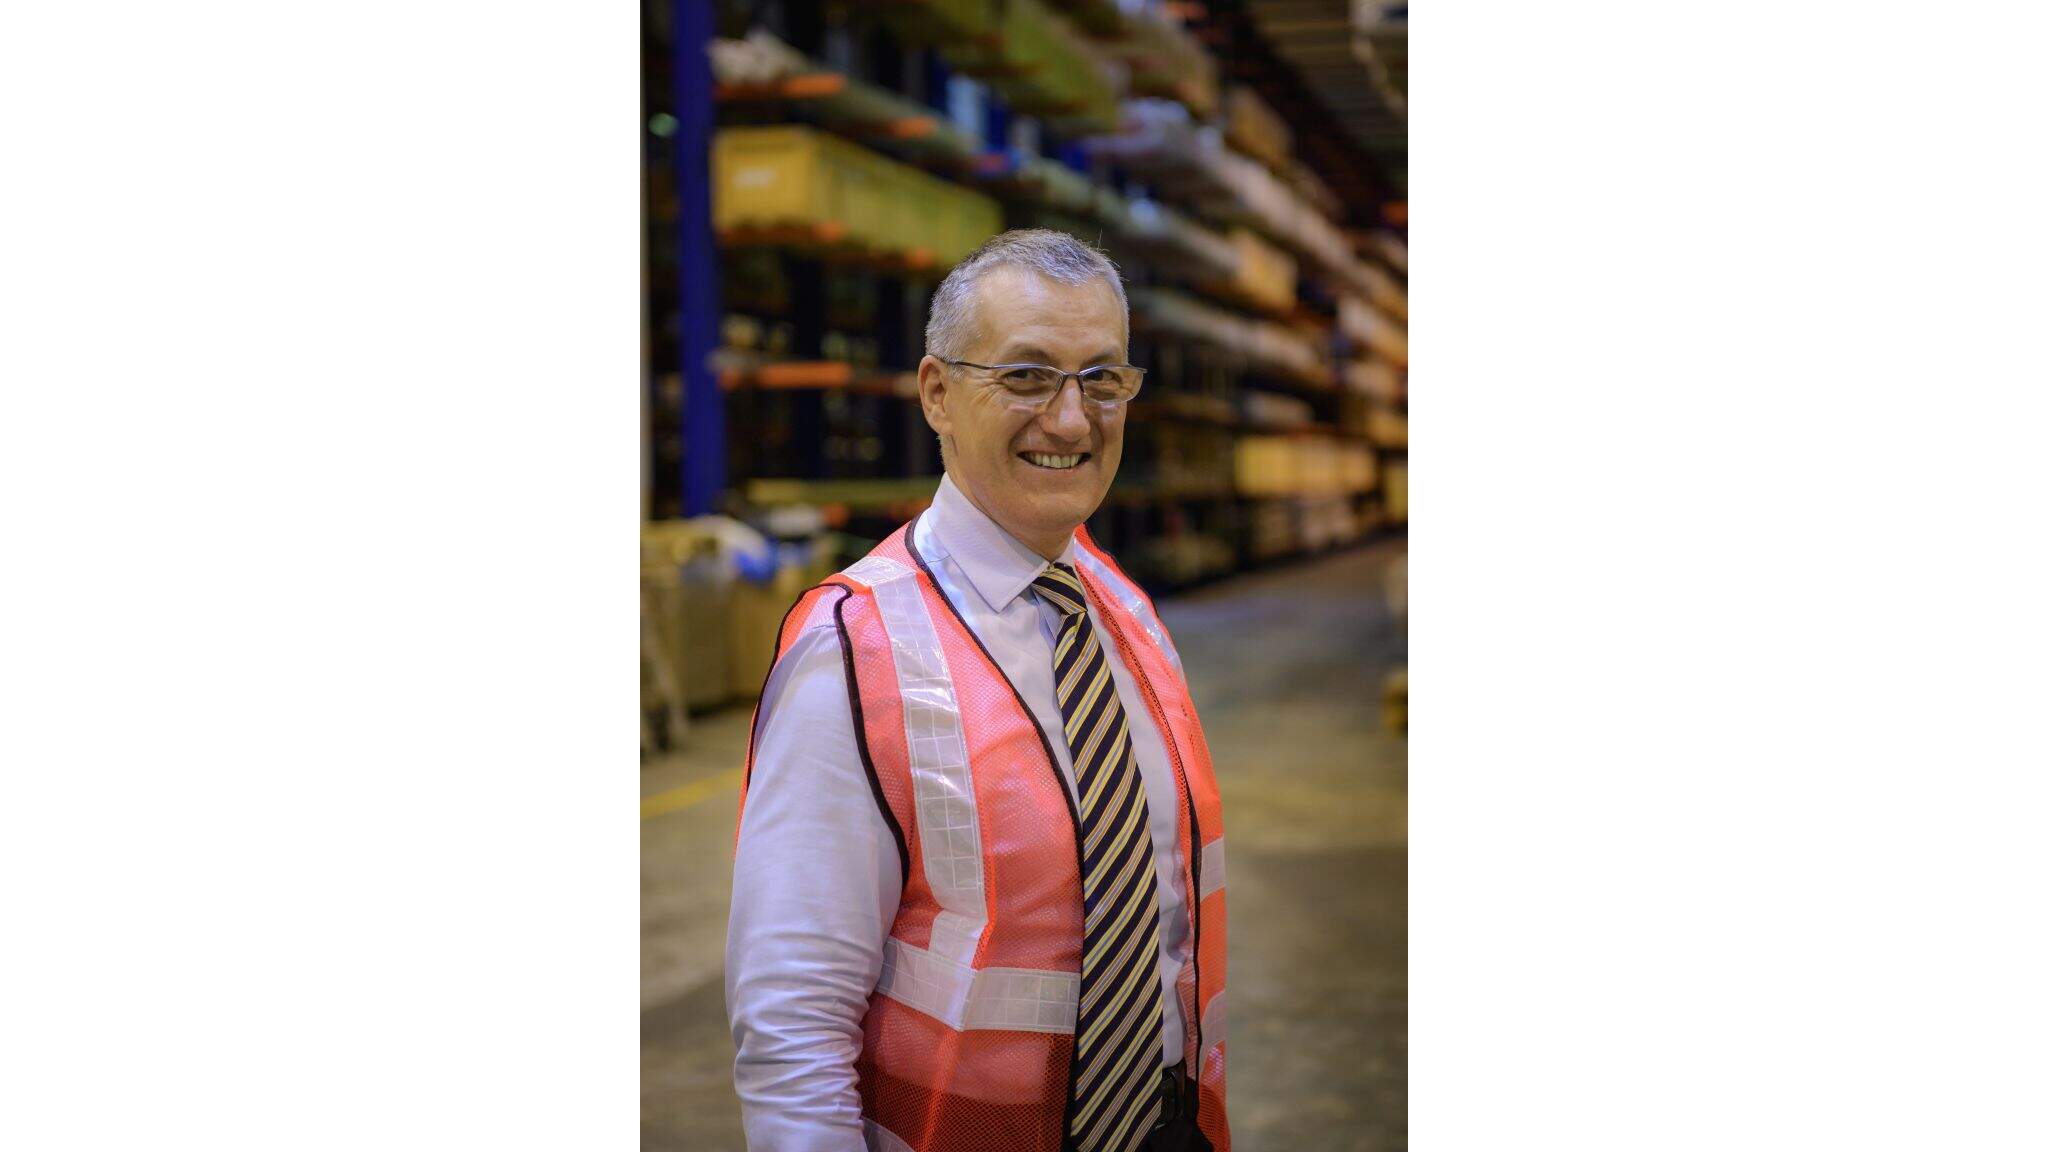 Frank Stadus, Managing Director DACHSER Air & Sea Logistics Singapore